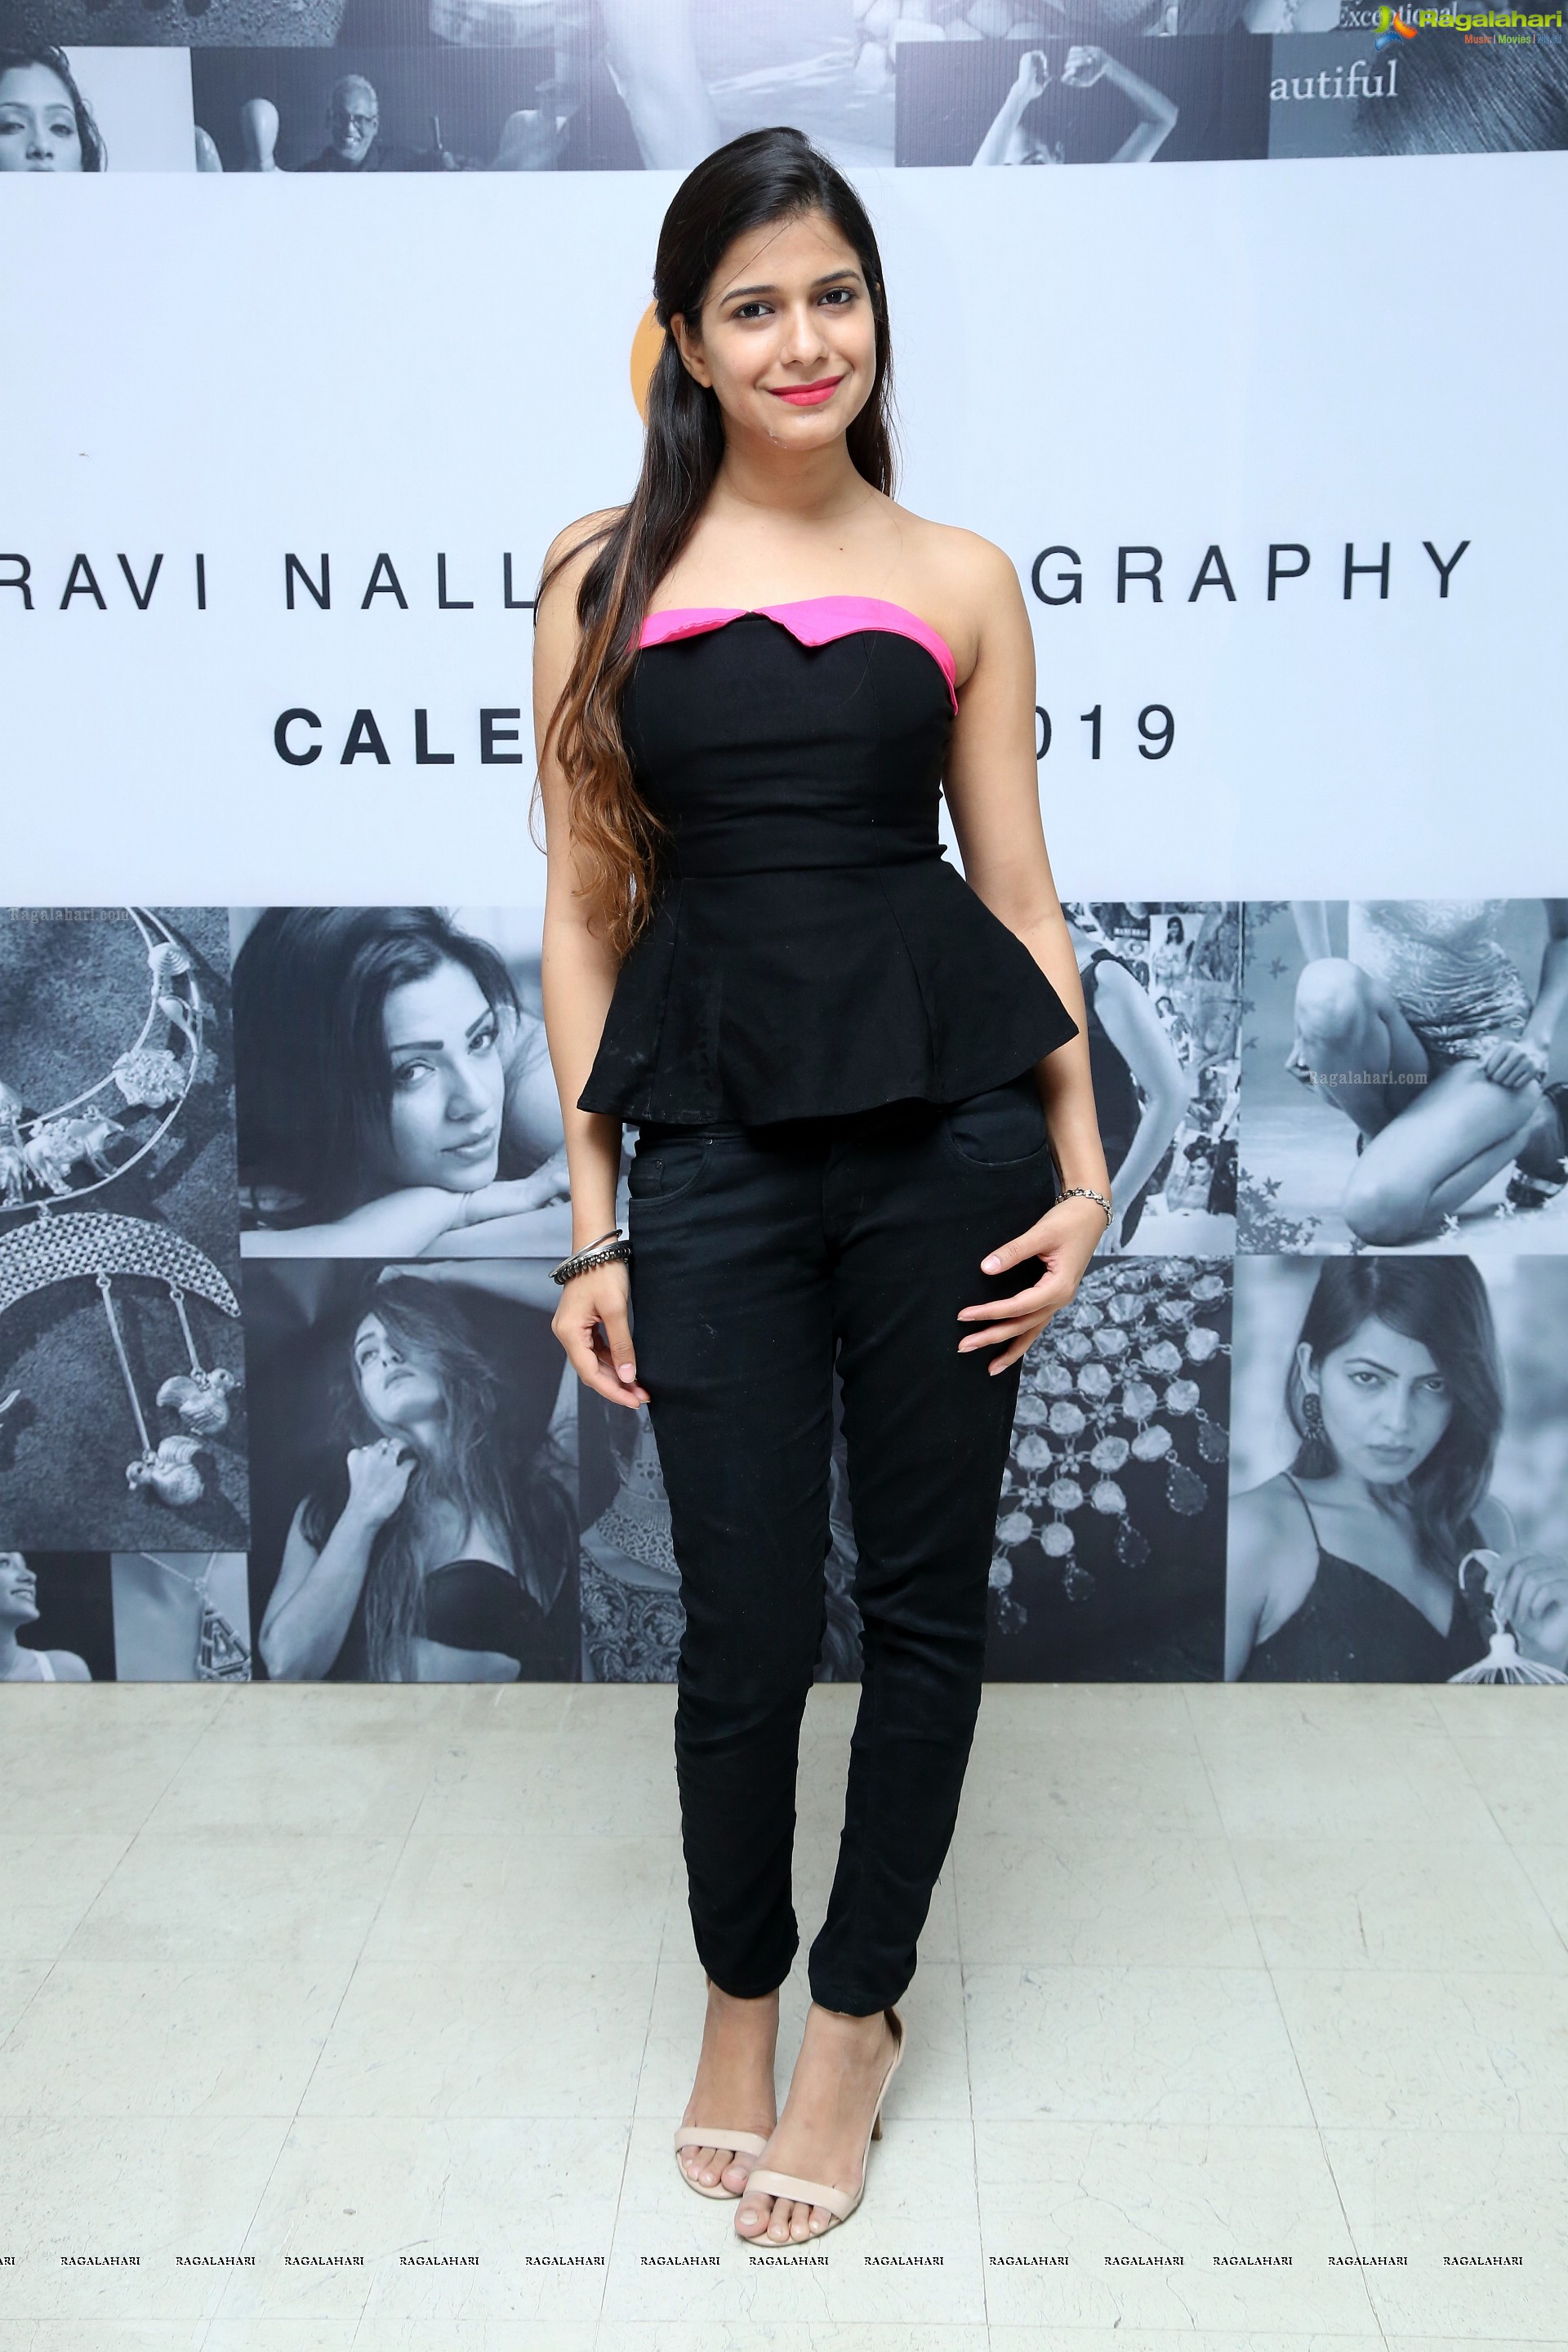 Pound Kakar at Ravi Nalli Photography’s Calendar 2019 Launch - HD Gallery